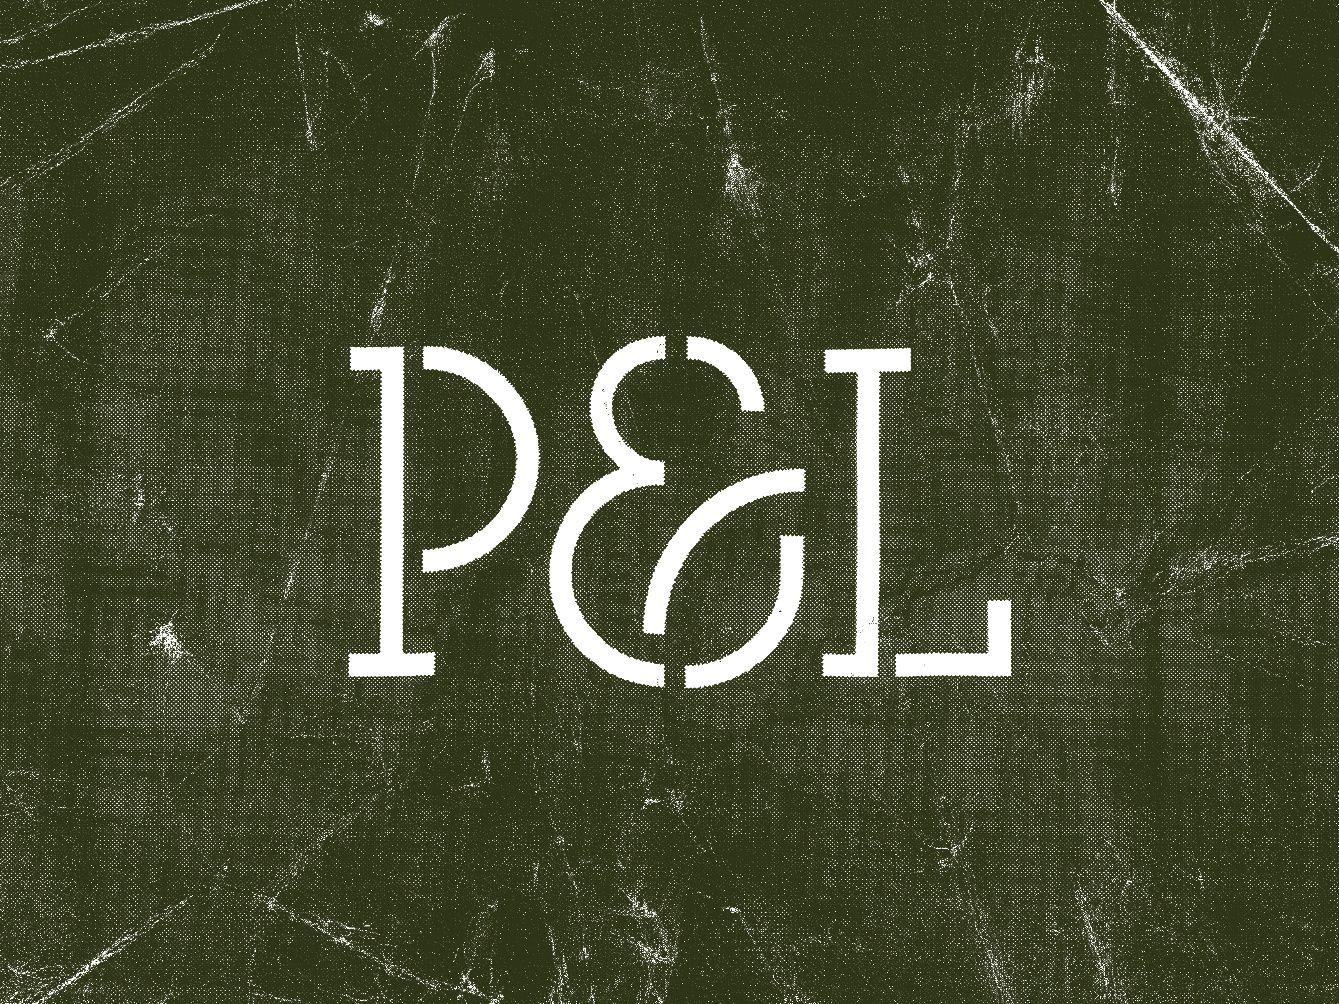 P&L Logo - P&L - Year 1 by Luke D. Schaffner on Dribbble